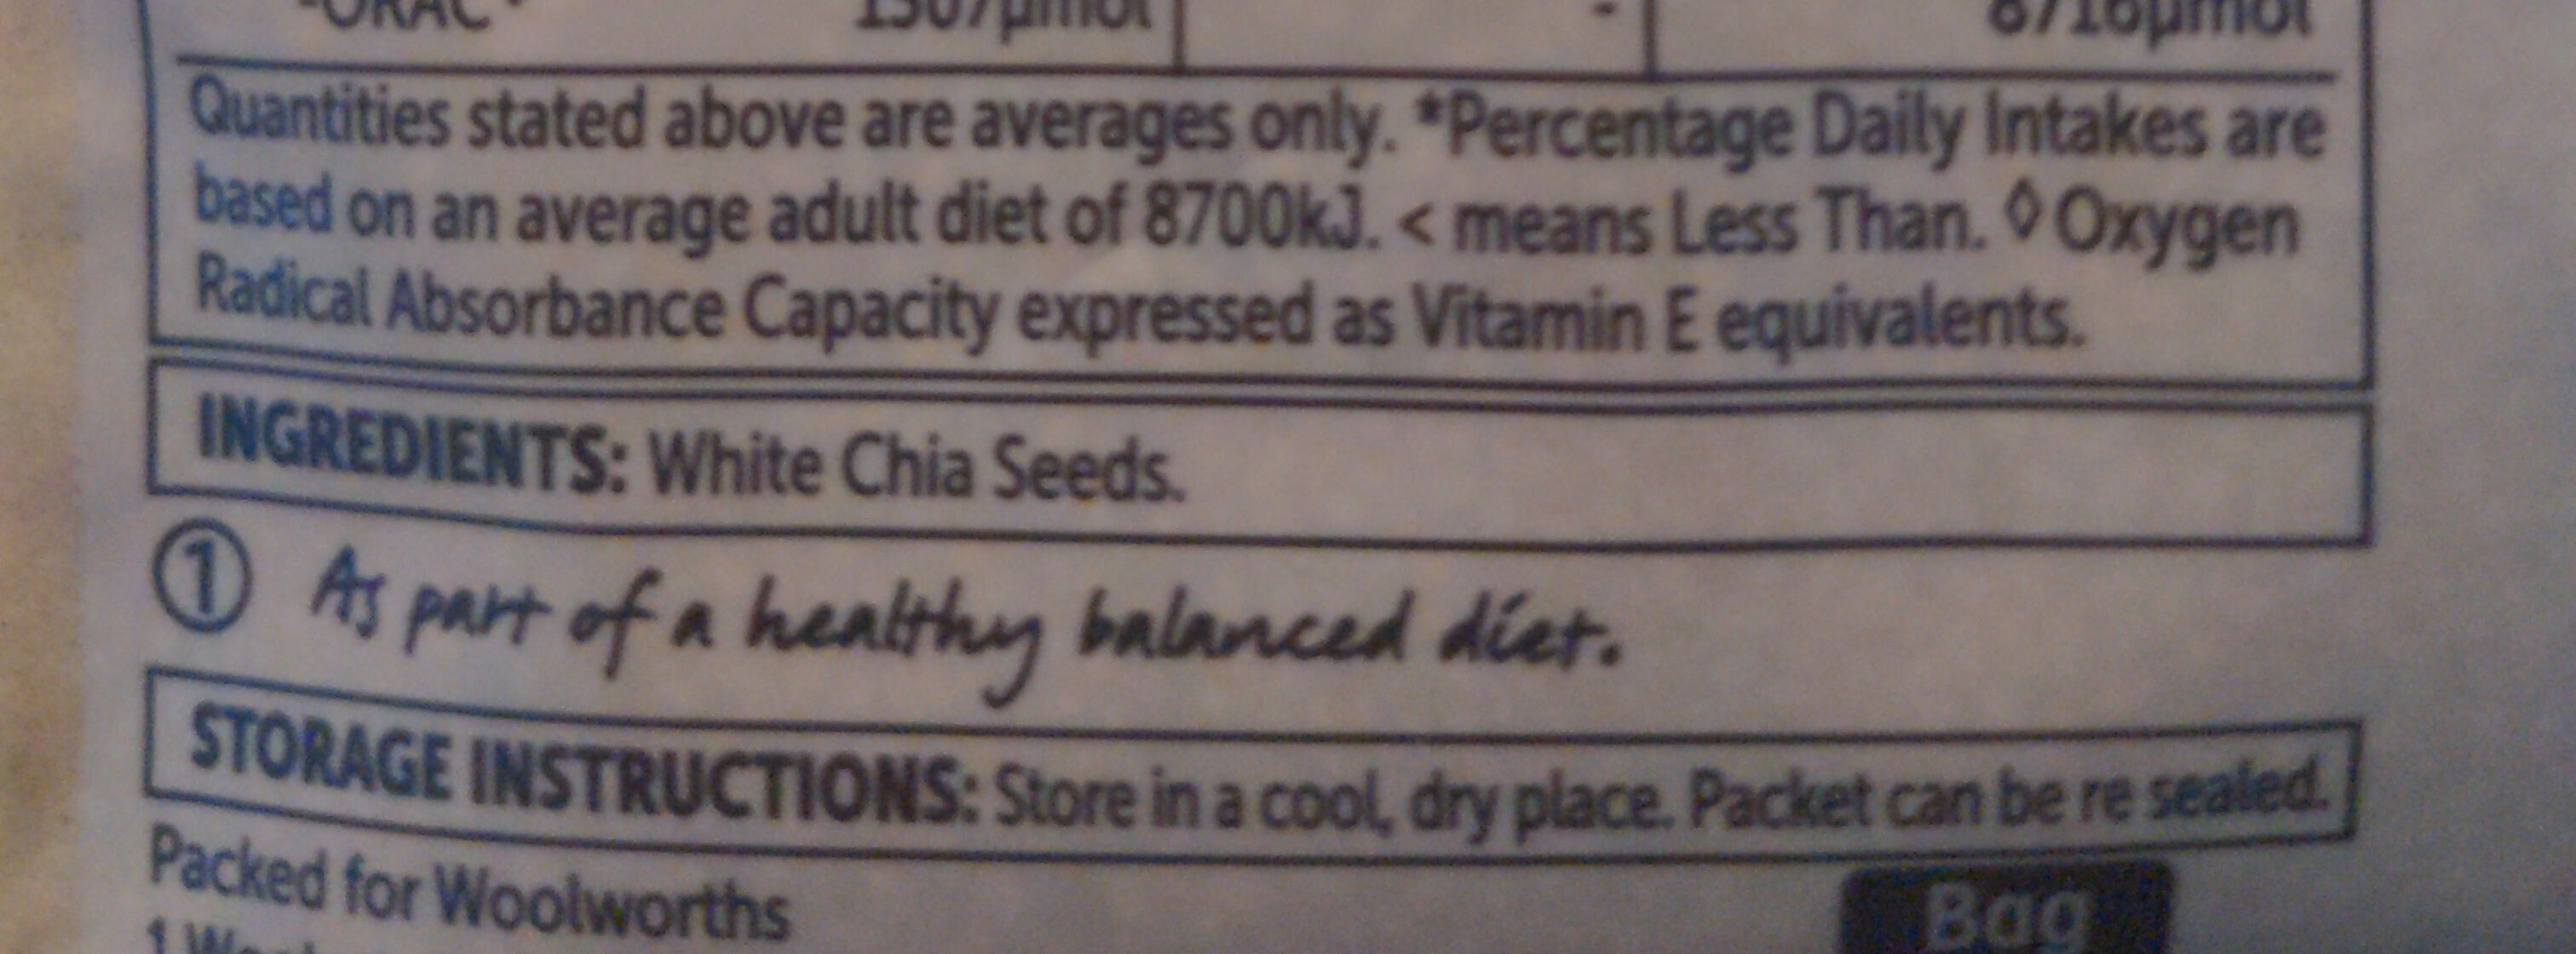 white chia seeds - Ingredients